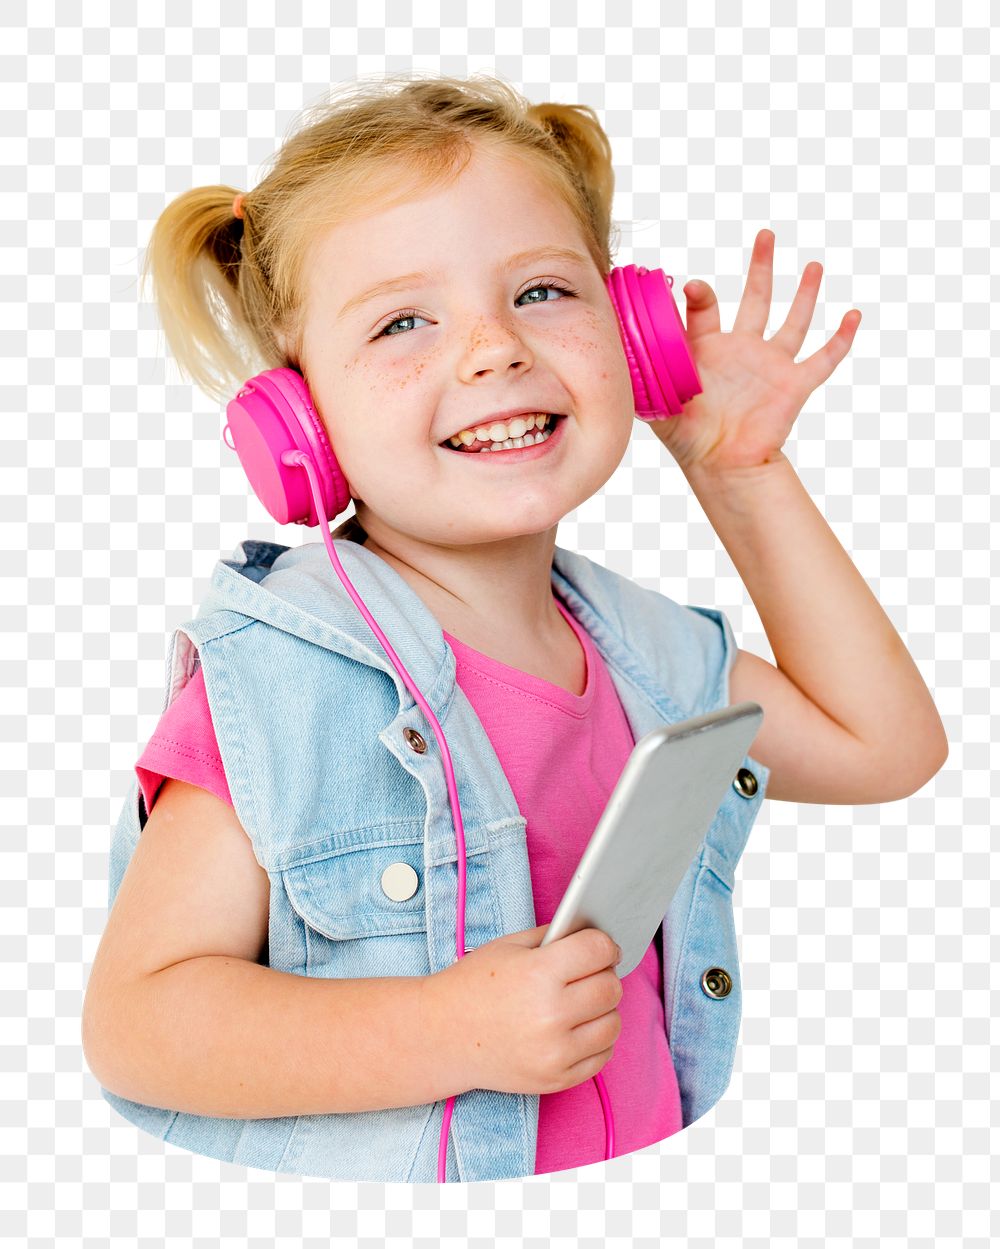 Png kid enjoying music sticker, transparent background